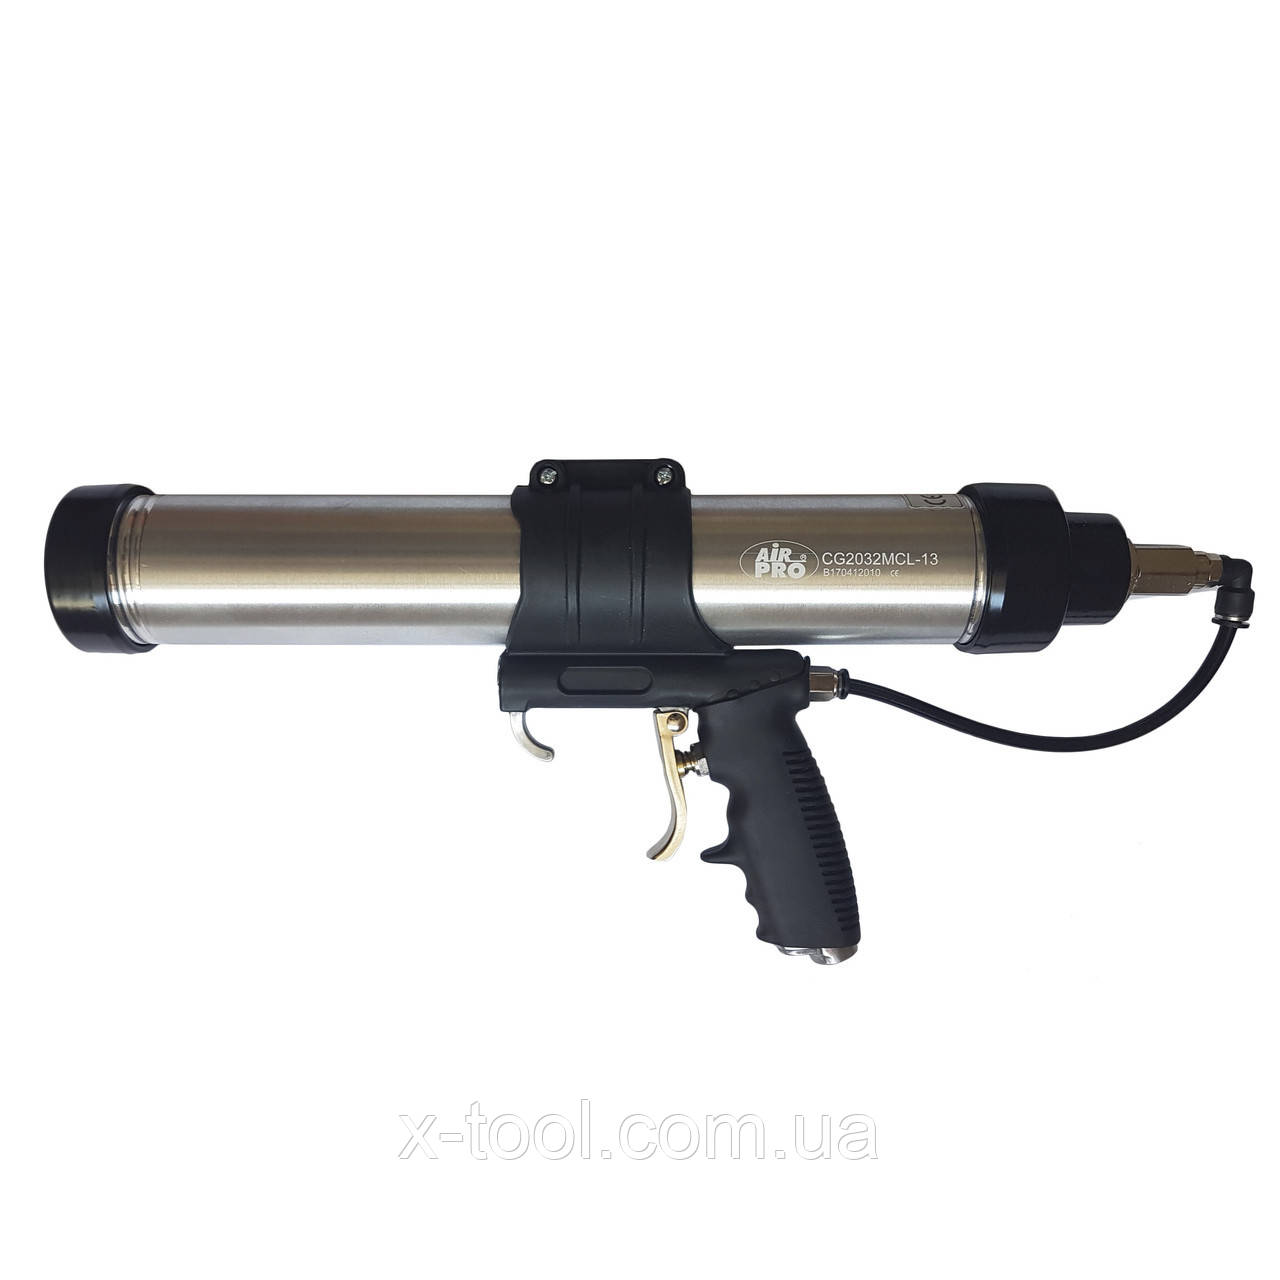 Пистолет для герметика 2 в 1 пневматический Air Pro CG2032MCL-13 (Тайвань)